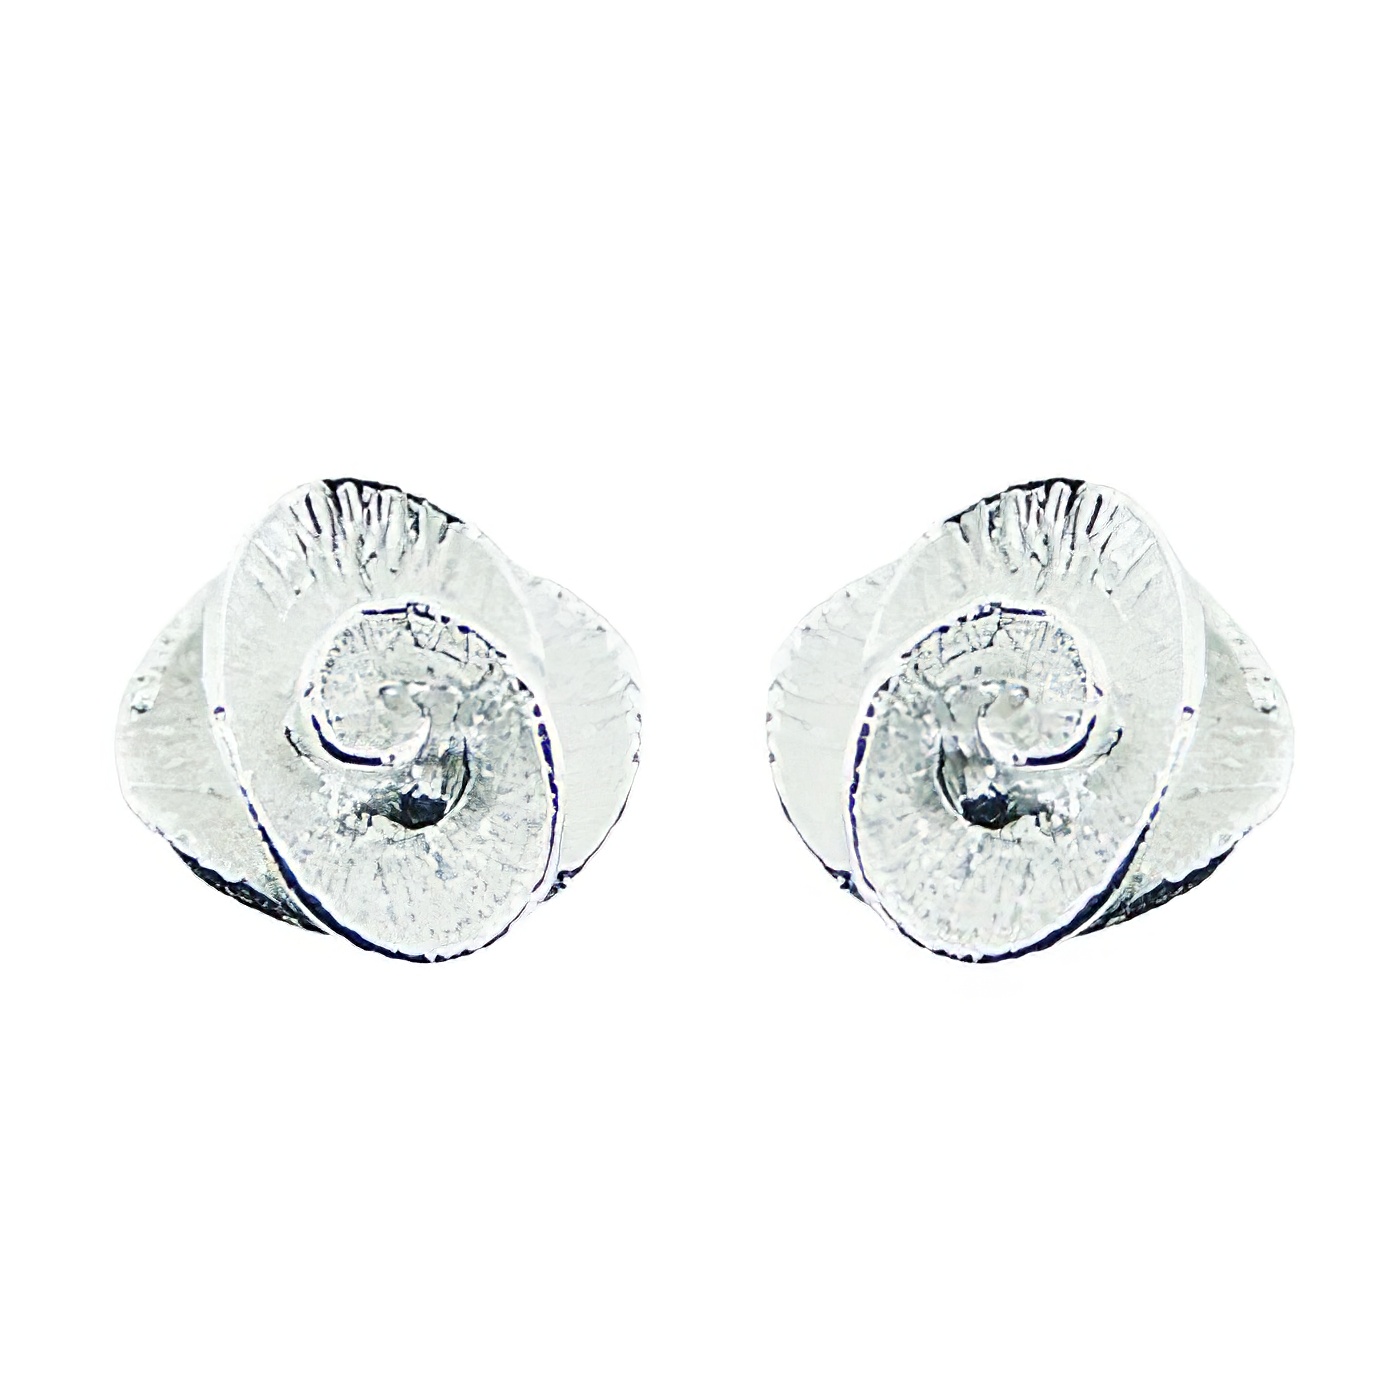 Adorable Twirled Flowers 925 Sterling Silver Stud Earrings 